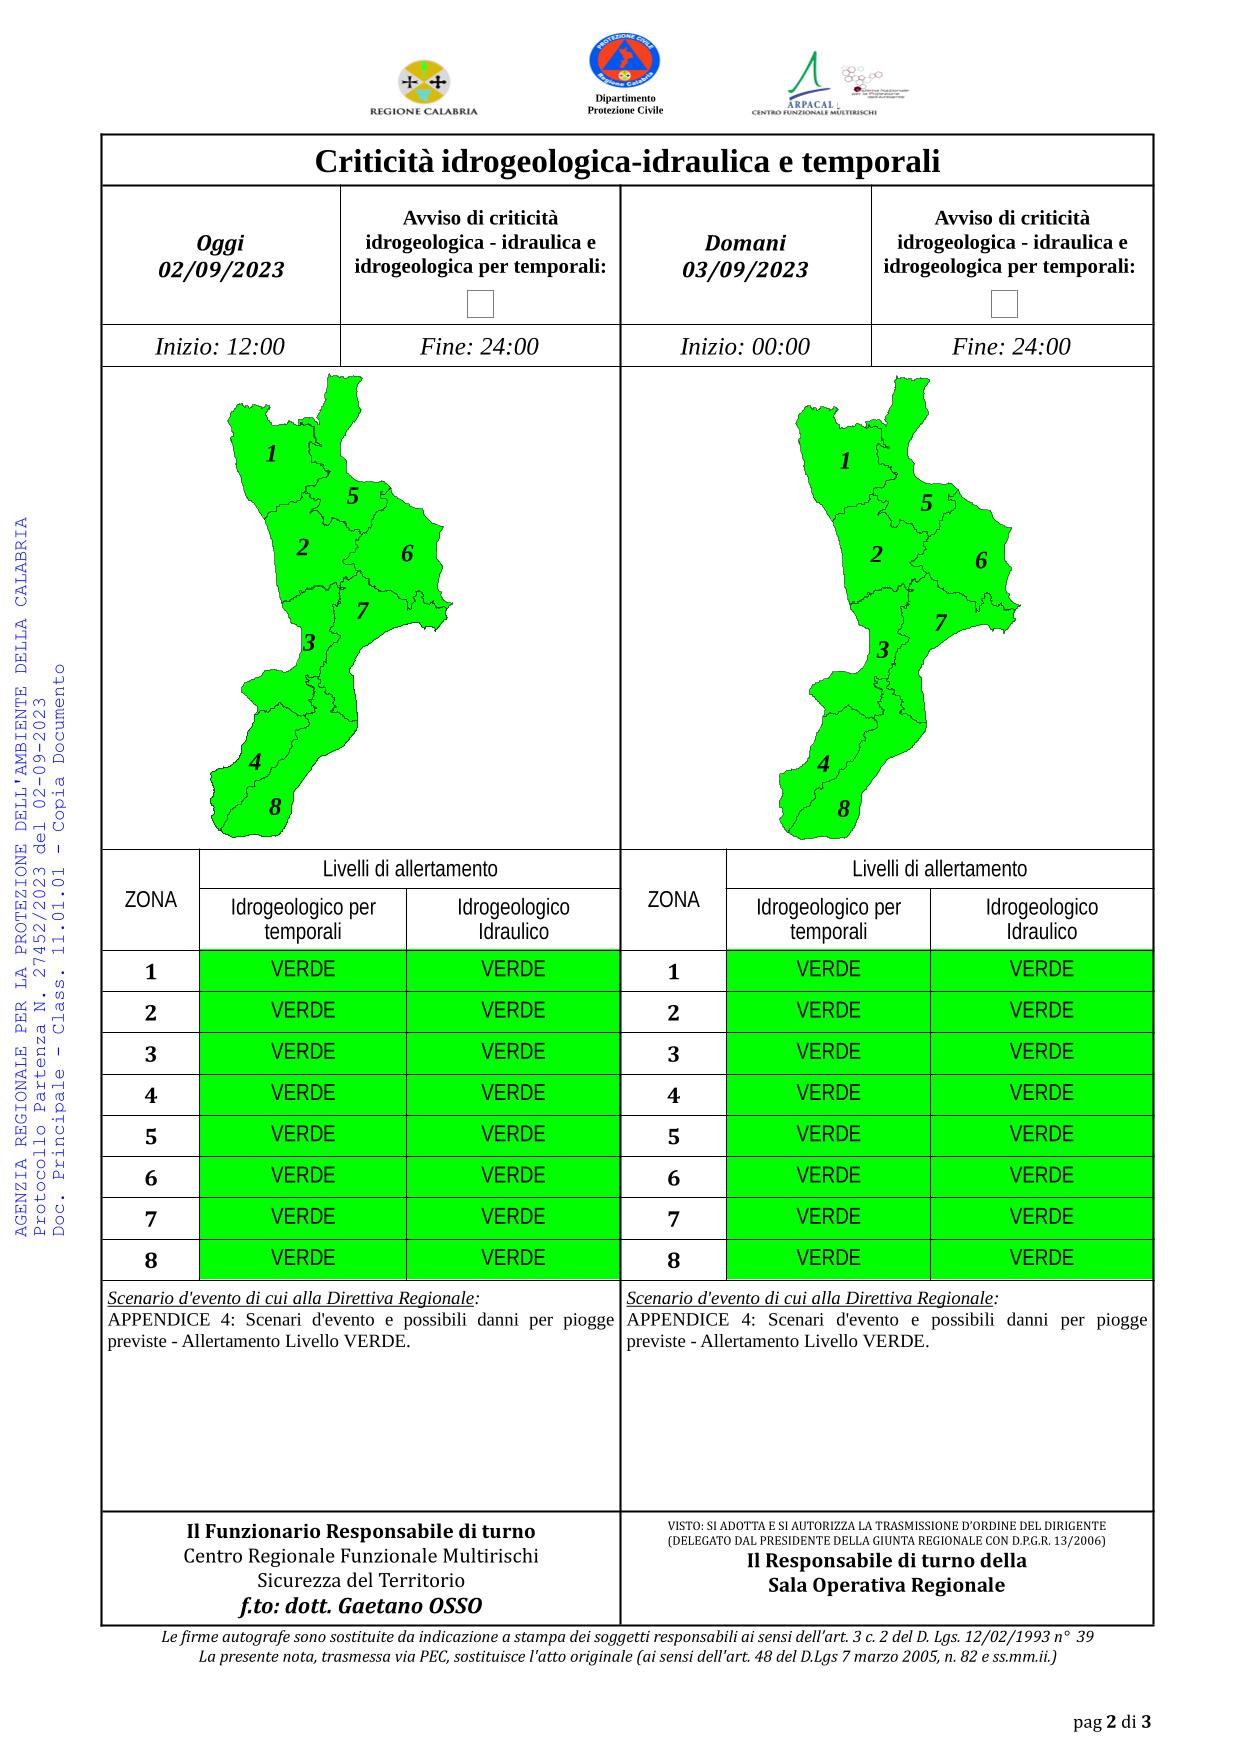 Criticità idrogeologica-idraulica e temporali in Calabria 02-09-2023